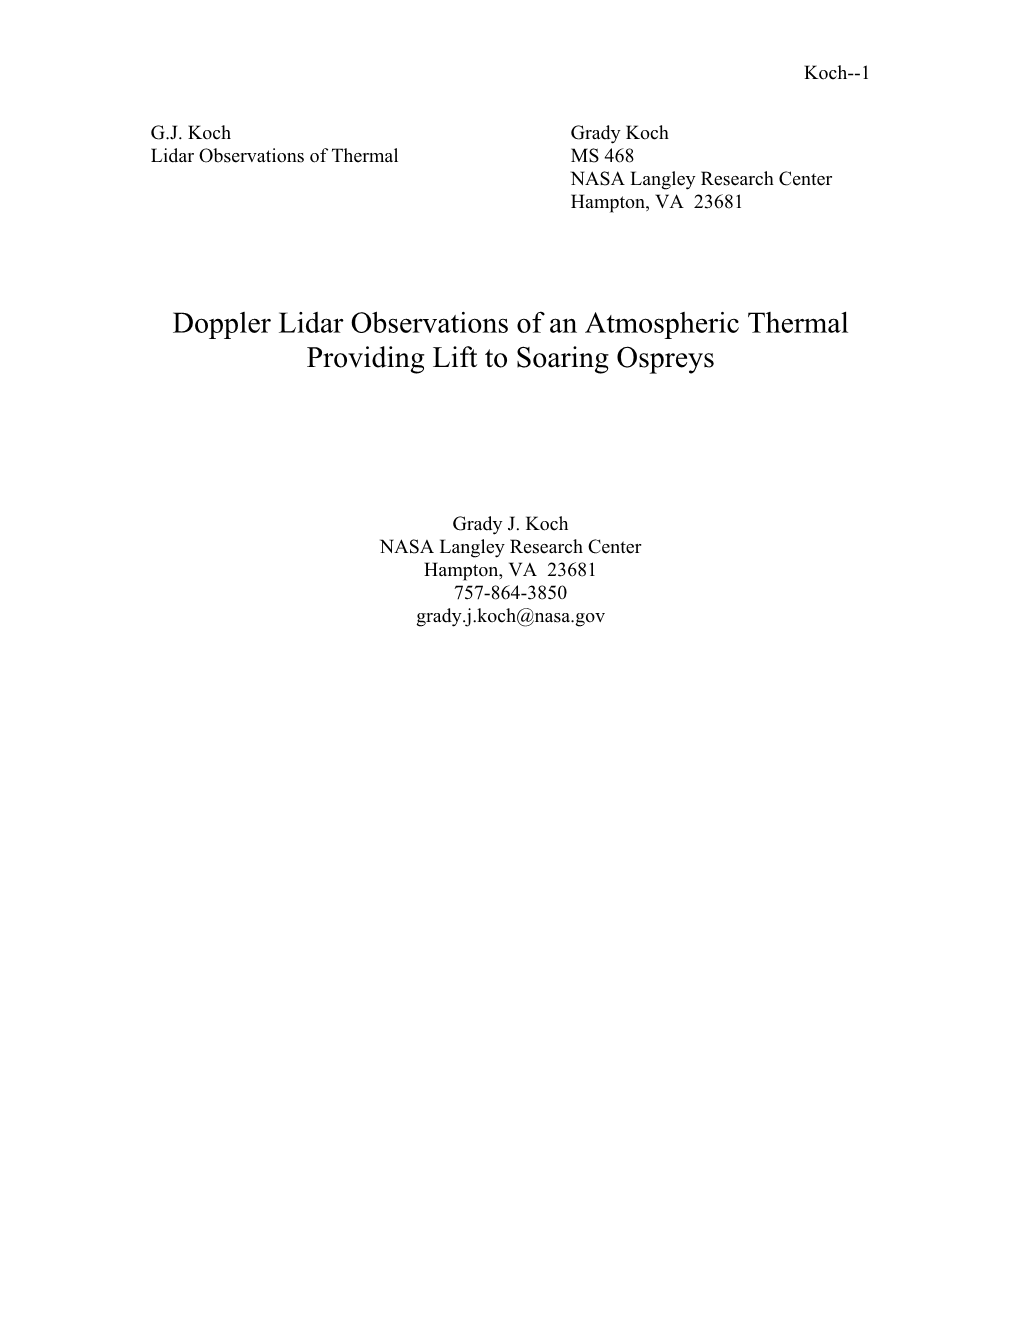 Doppler Lidar Observations of an Atmospheric Thermal Providing Lift to Soaring Ospreys